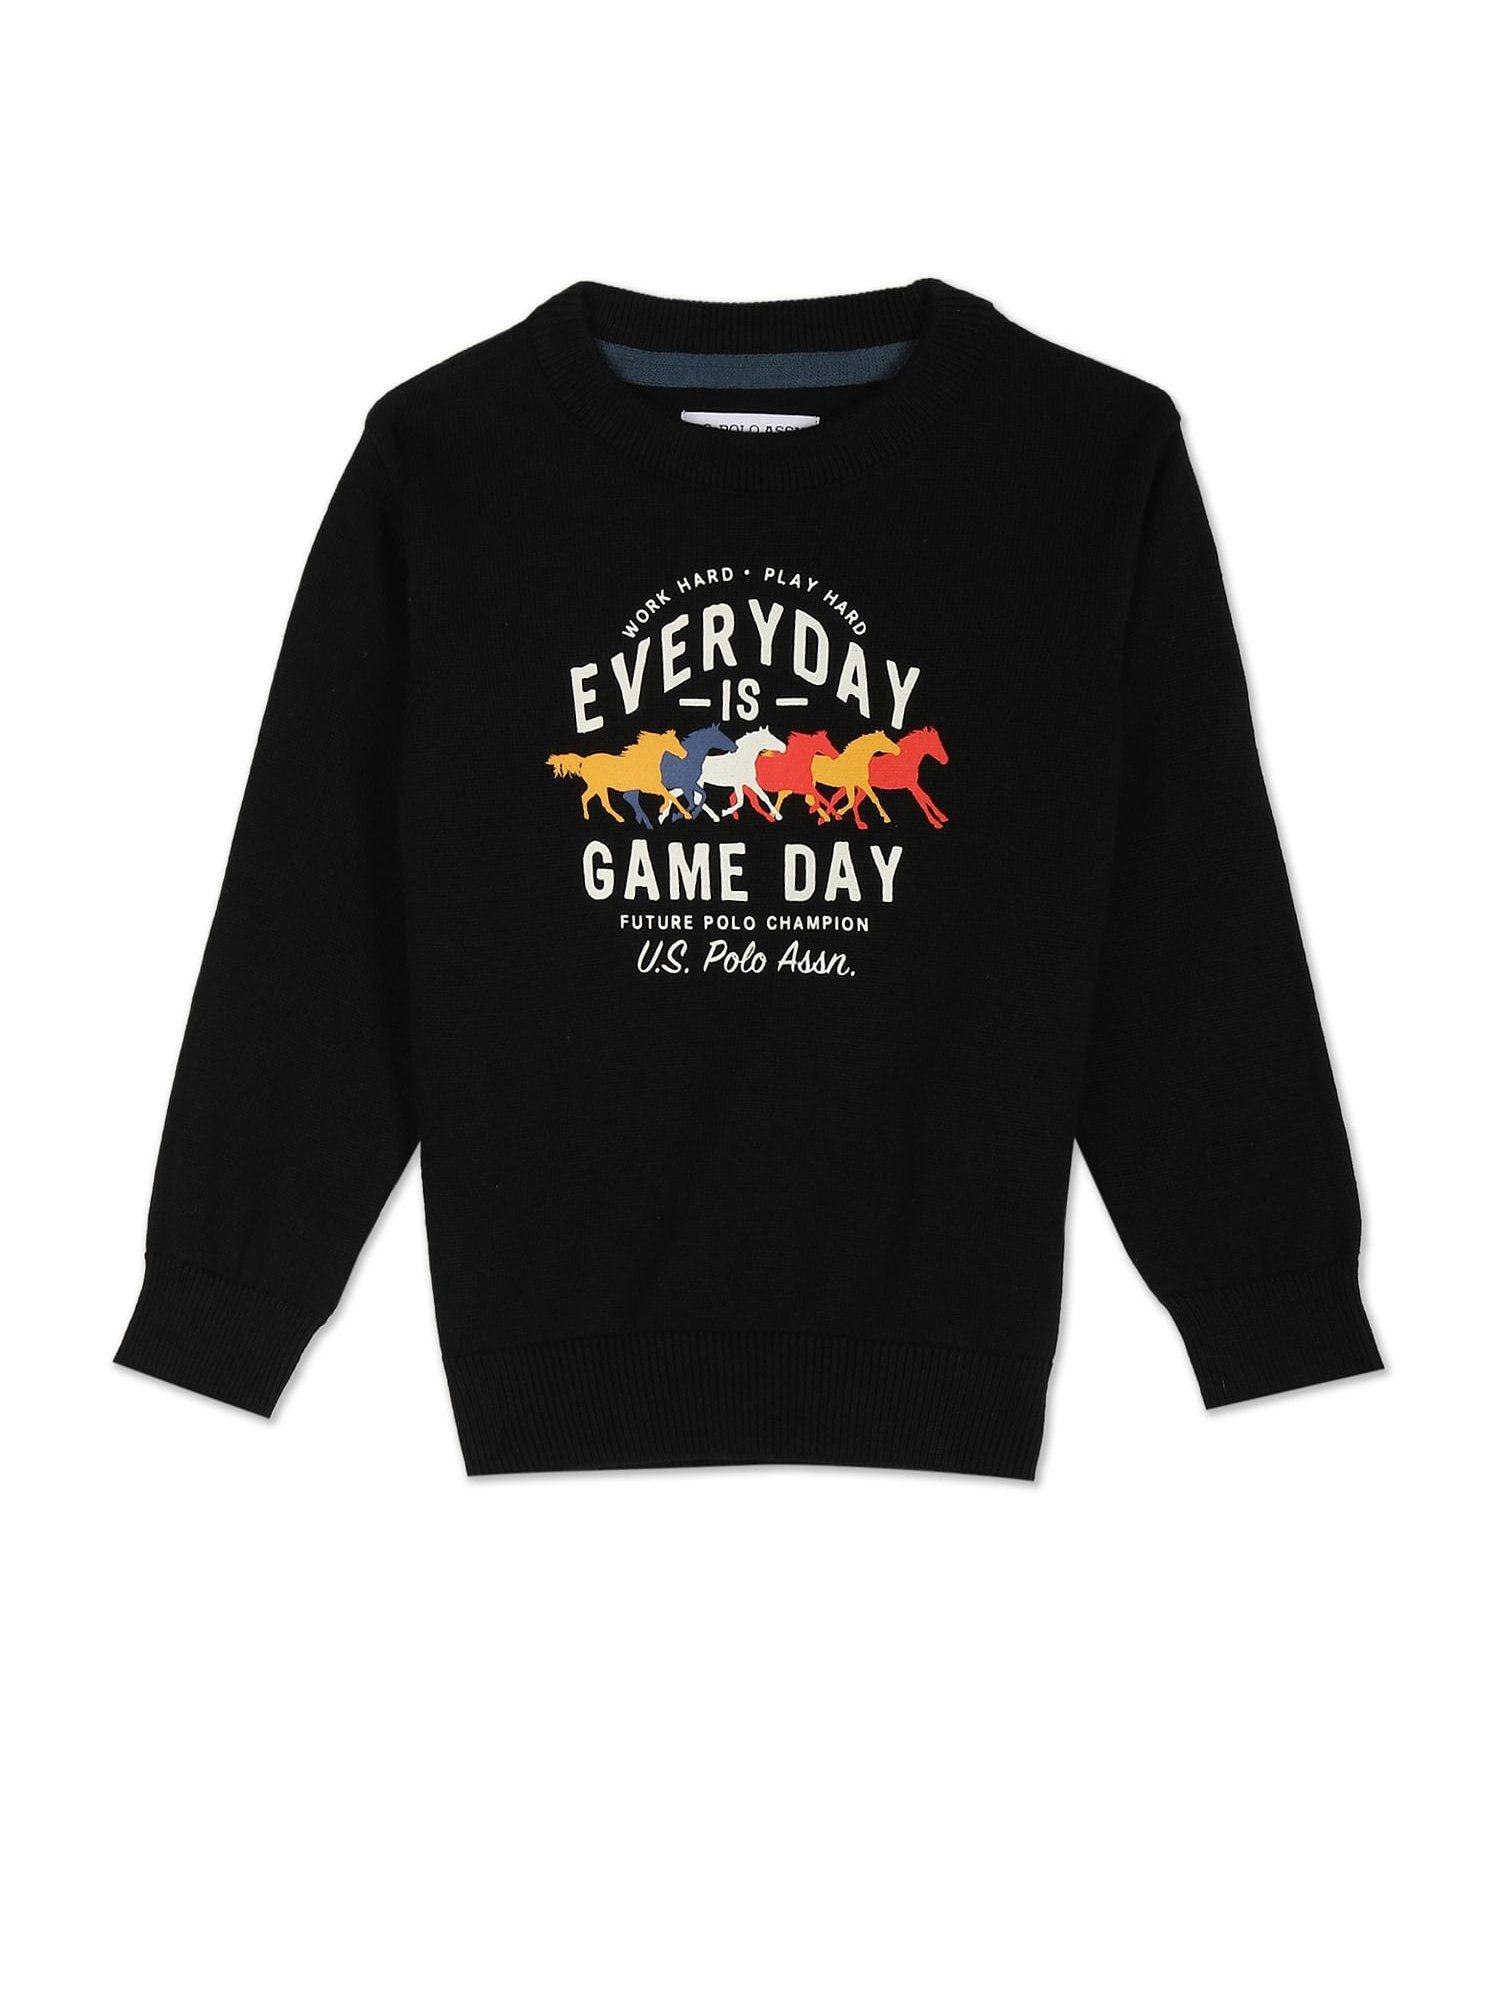 Boys Black Crew Neck Graphic Print Cotton Sweater